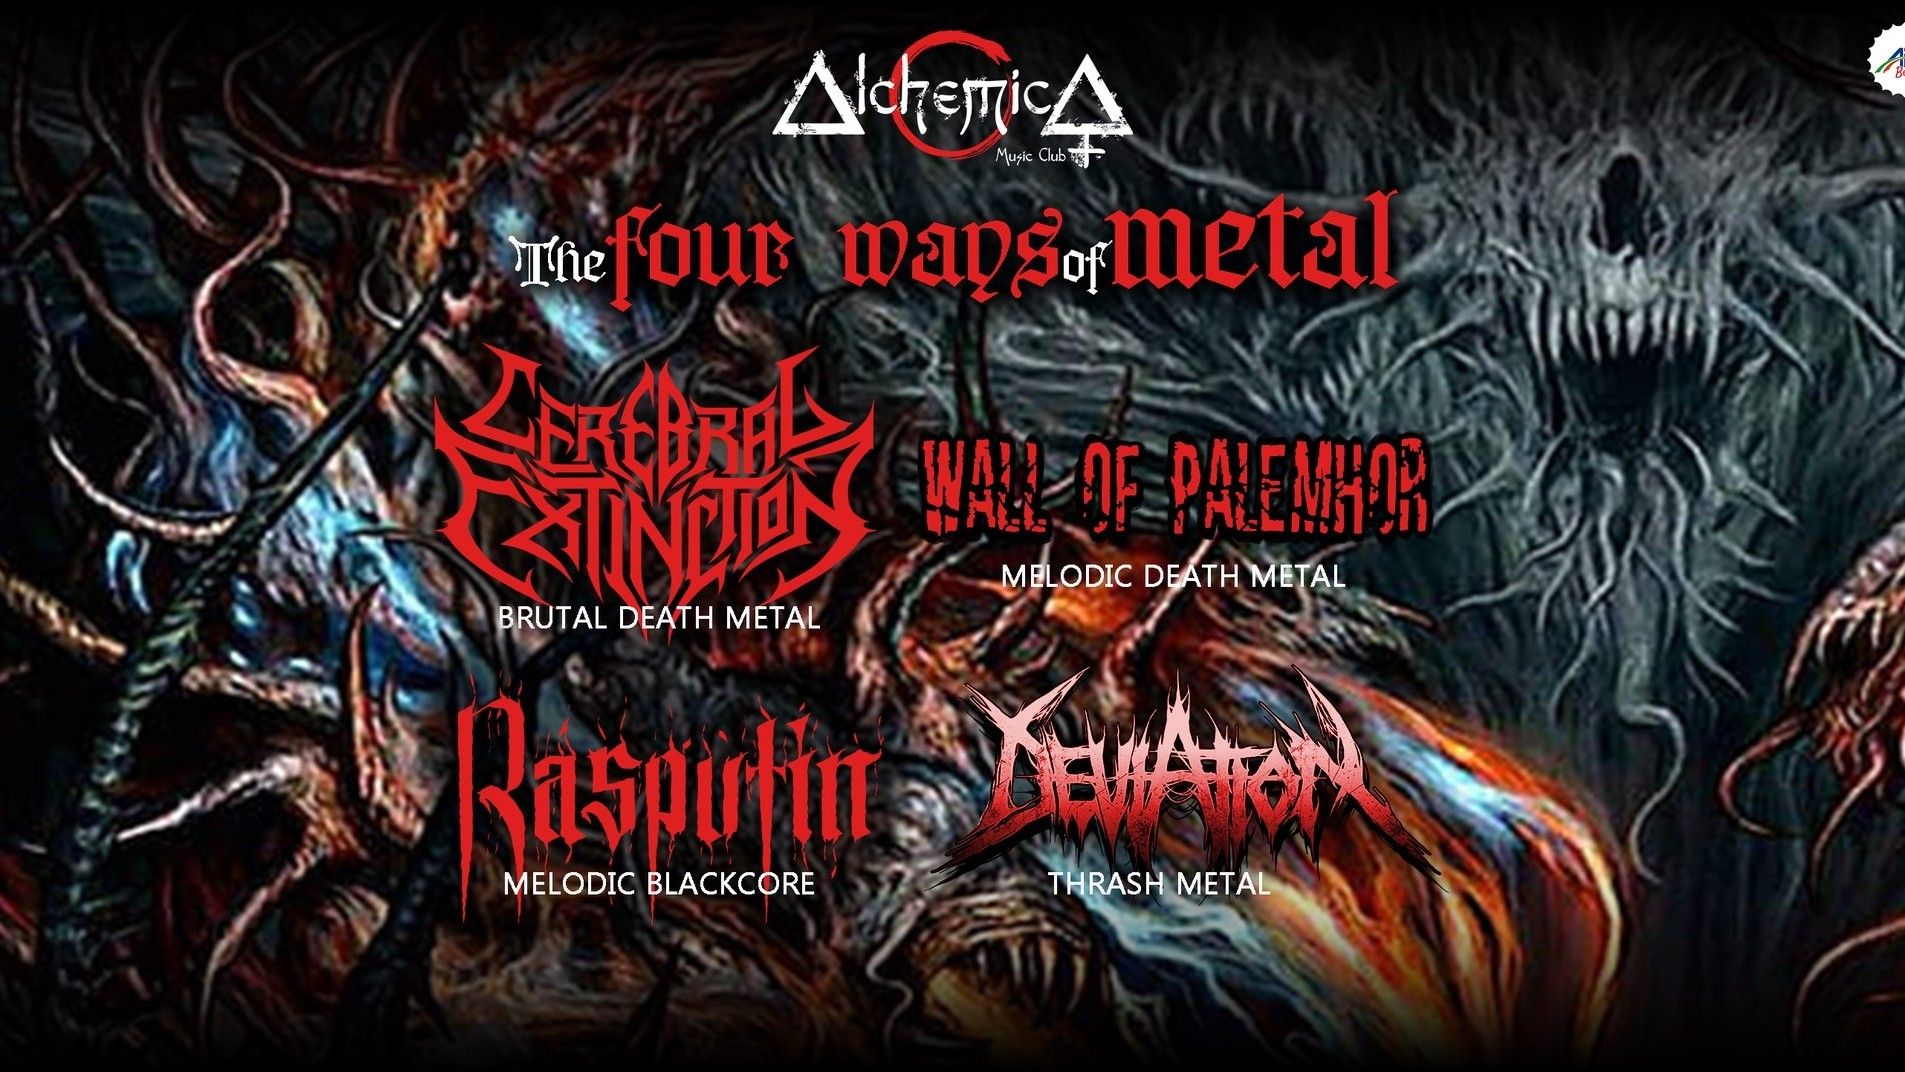 The Four Ways of Metal: Cerebral Extinction + Wall of Palemhor + Rasputin + Deviation